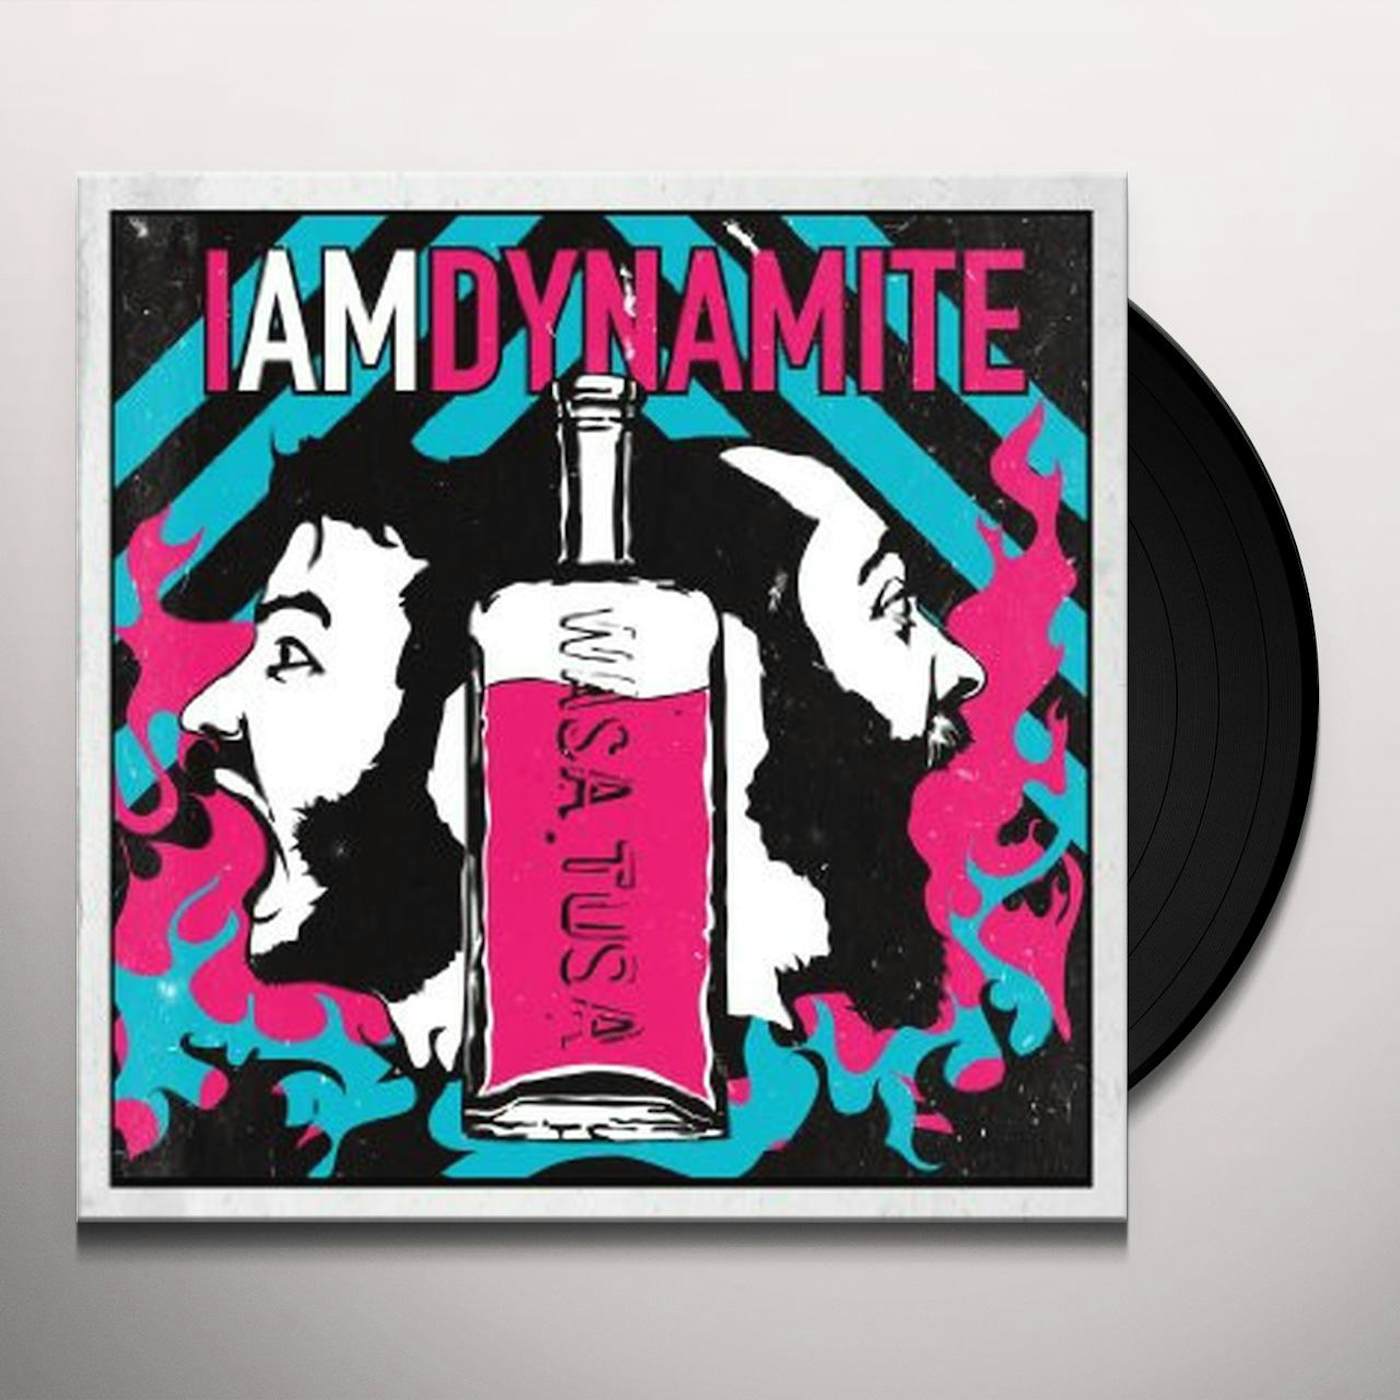 IAMDYNAMITE Wasa Tusa Vinyl Record